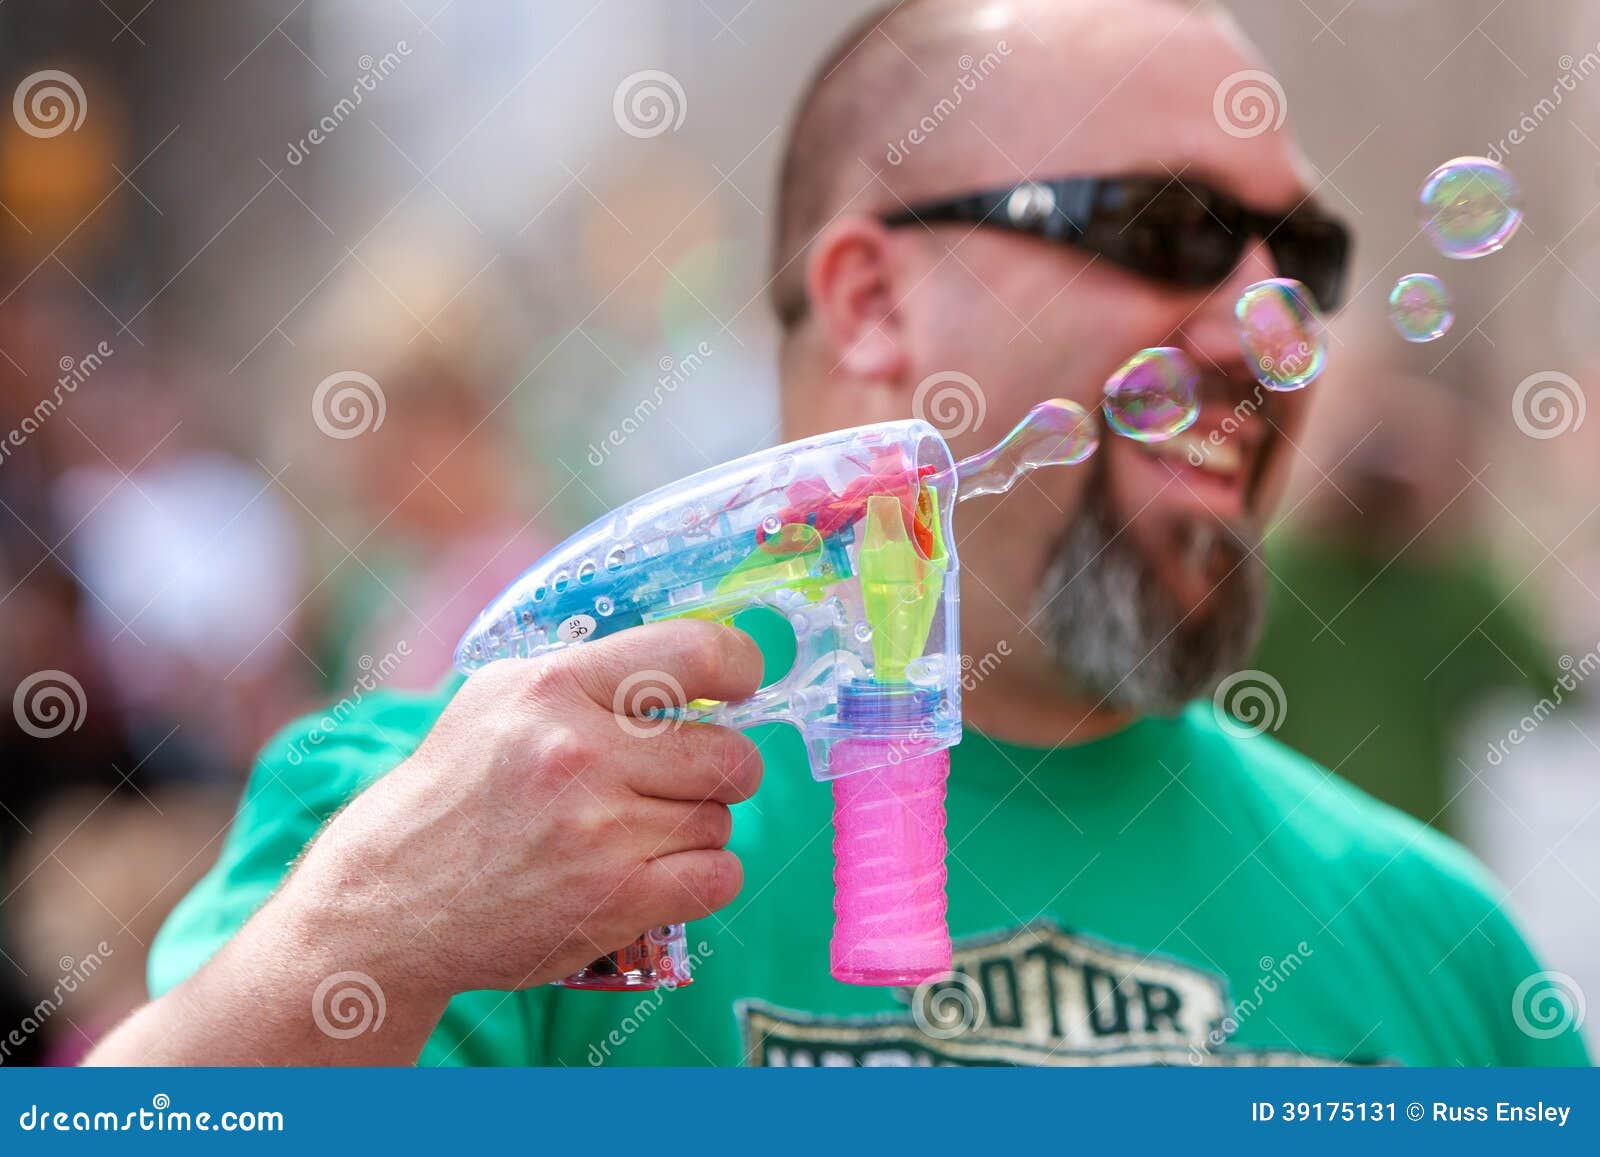 smiling-man-blows-bubbles-bubble-gun-atlanta-ga-usa-march-uses-to-blow-st-patrick-s-day-parade-peachtree-street-39175131.jpg